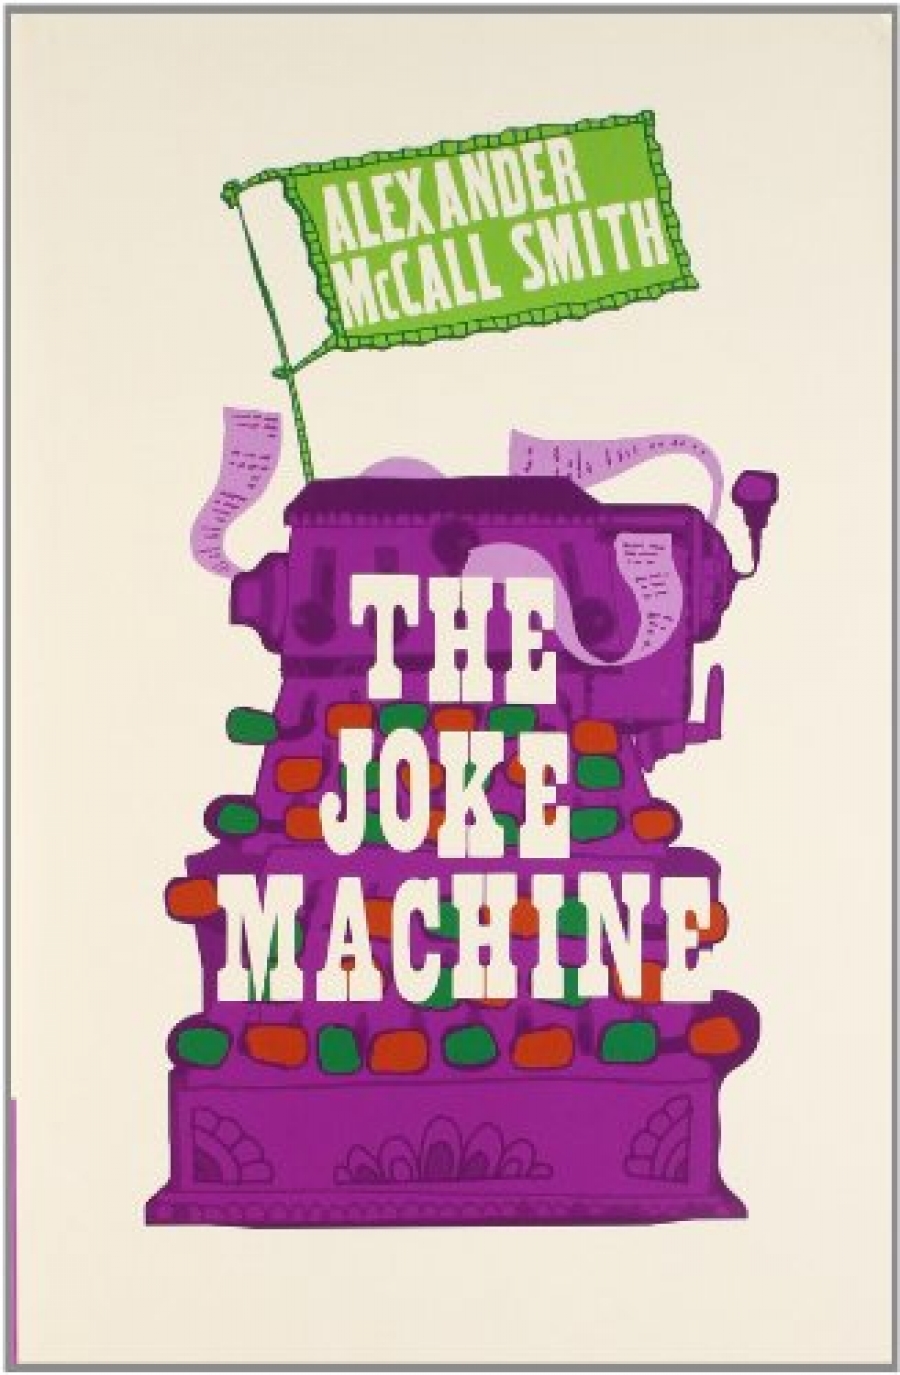 McCall Smith, Alexander Joke Machine 